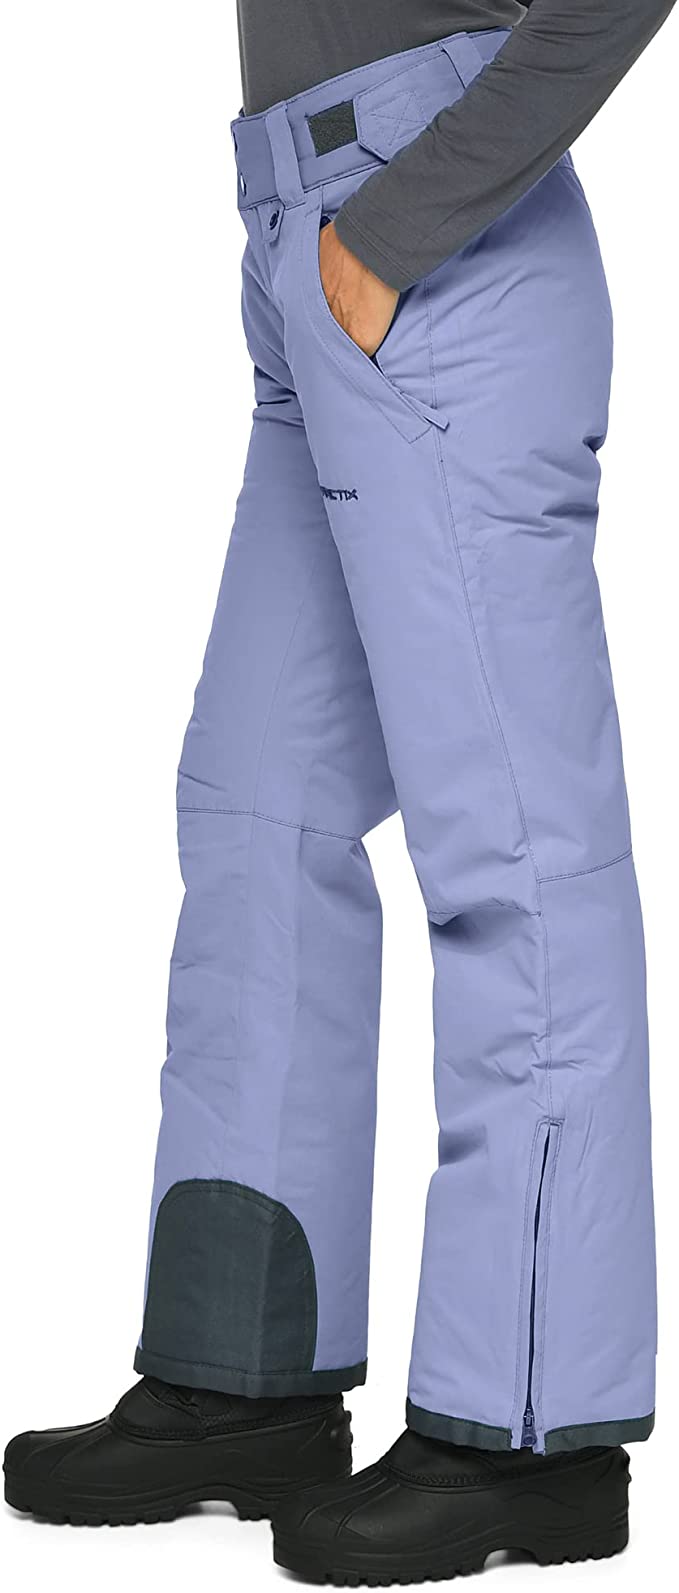 NWT XL (16-18) Arctix womens fleece lined ski pants - clothing